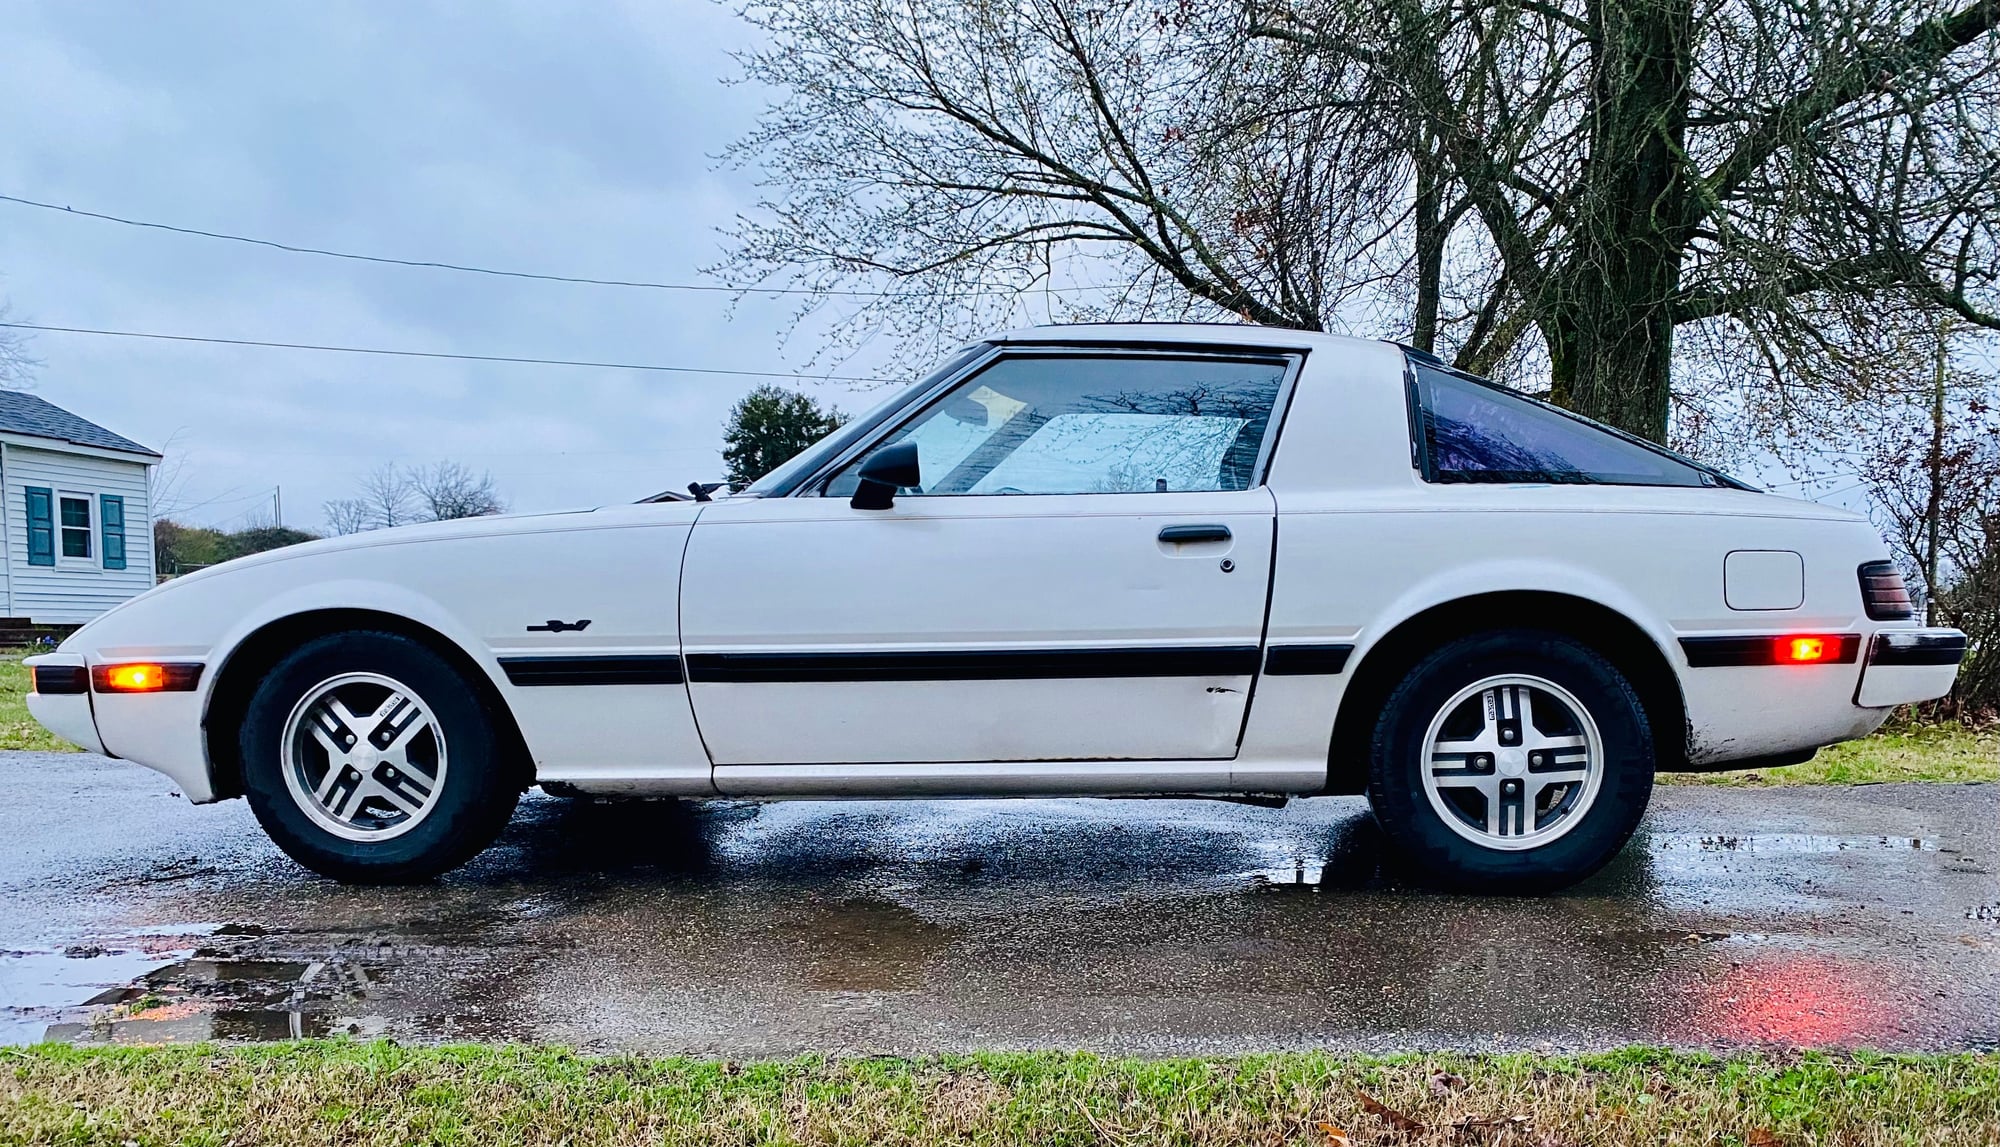 1985 Mazda RX-7 - 1985 RX-7 GSL North AL - Used - VIN JM1FB3312F0894876 - 182,374 Miles - Manual - White - Athens, AL 35614, United States